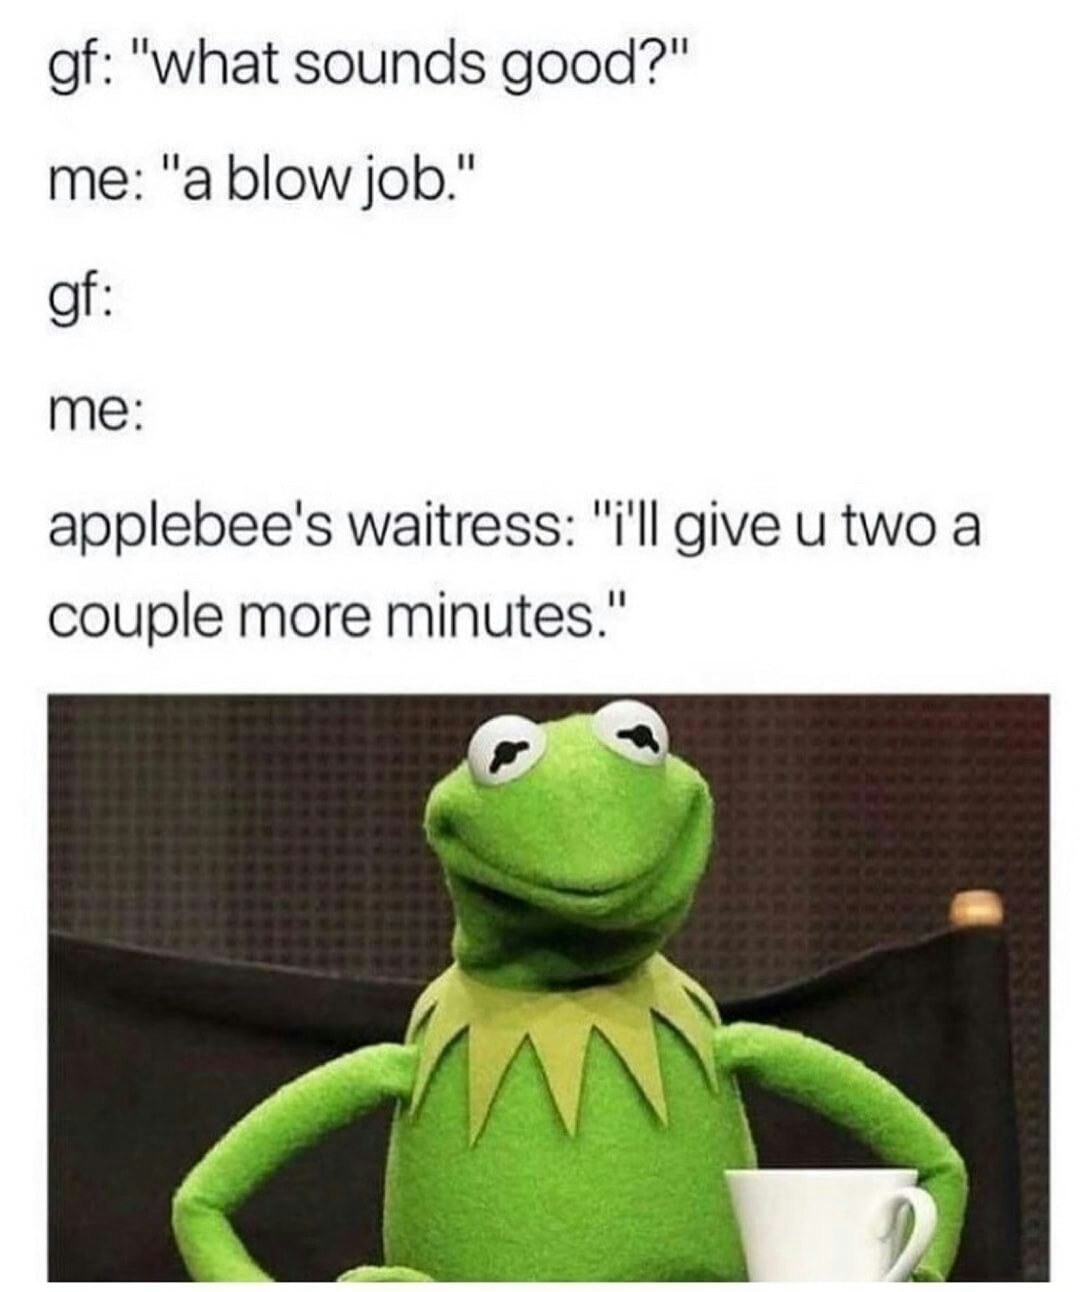 single and ready to mingle meme - gf "what sounds good?" me "a blow job." gf me applebee's waitress "i'll give u two a couple more minutes."